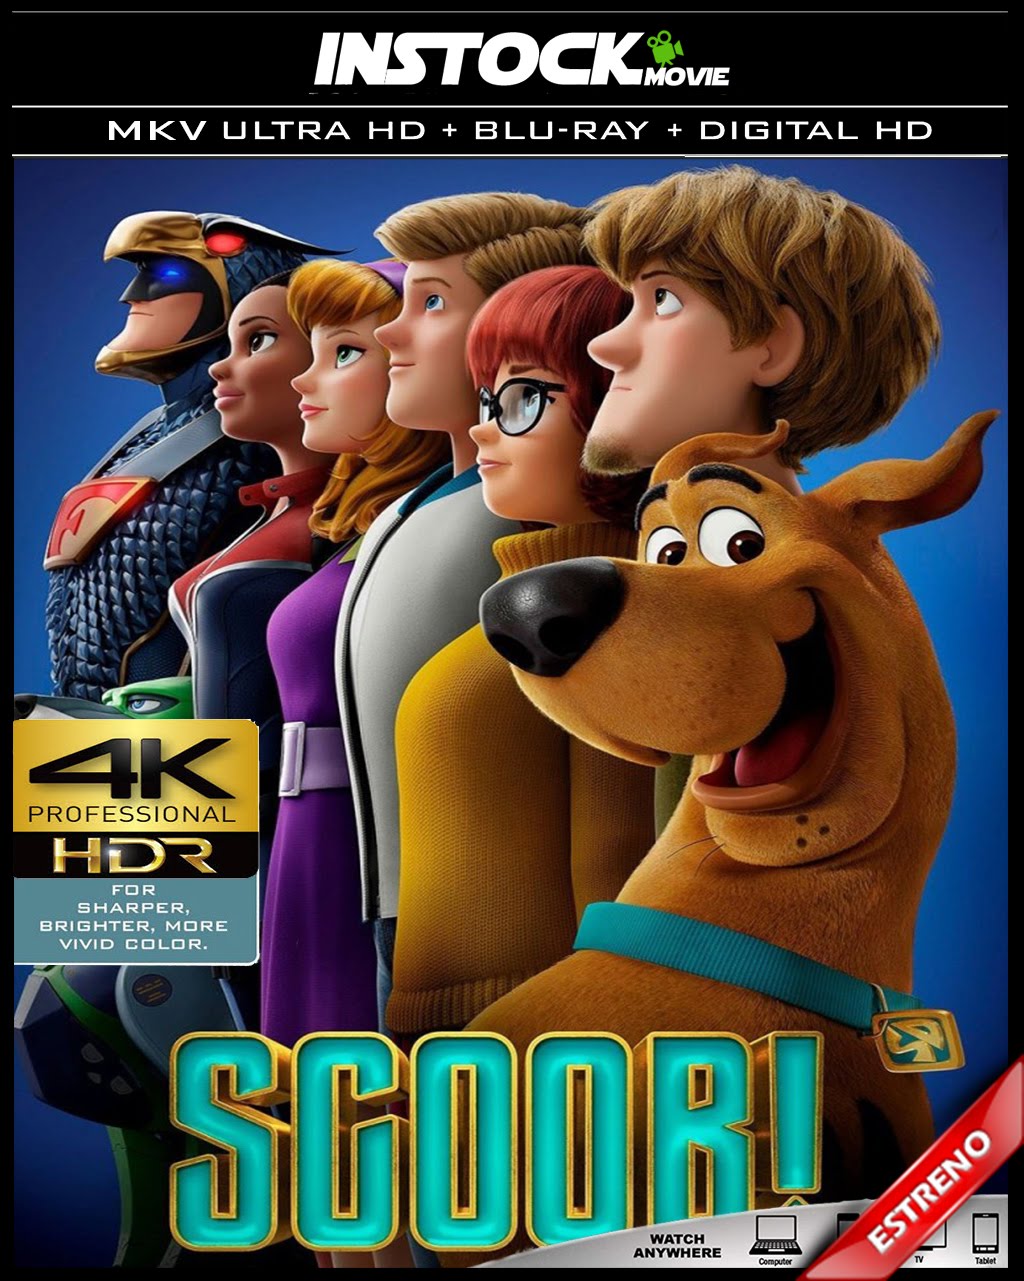 ¡Scooby! (2020) - InStock